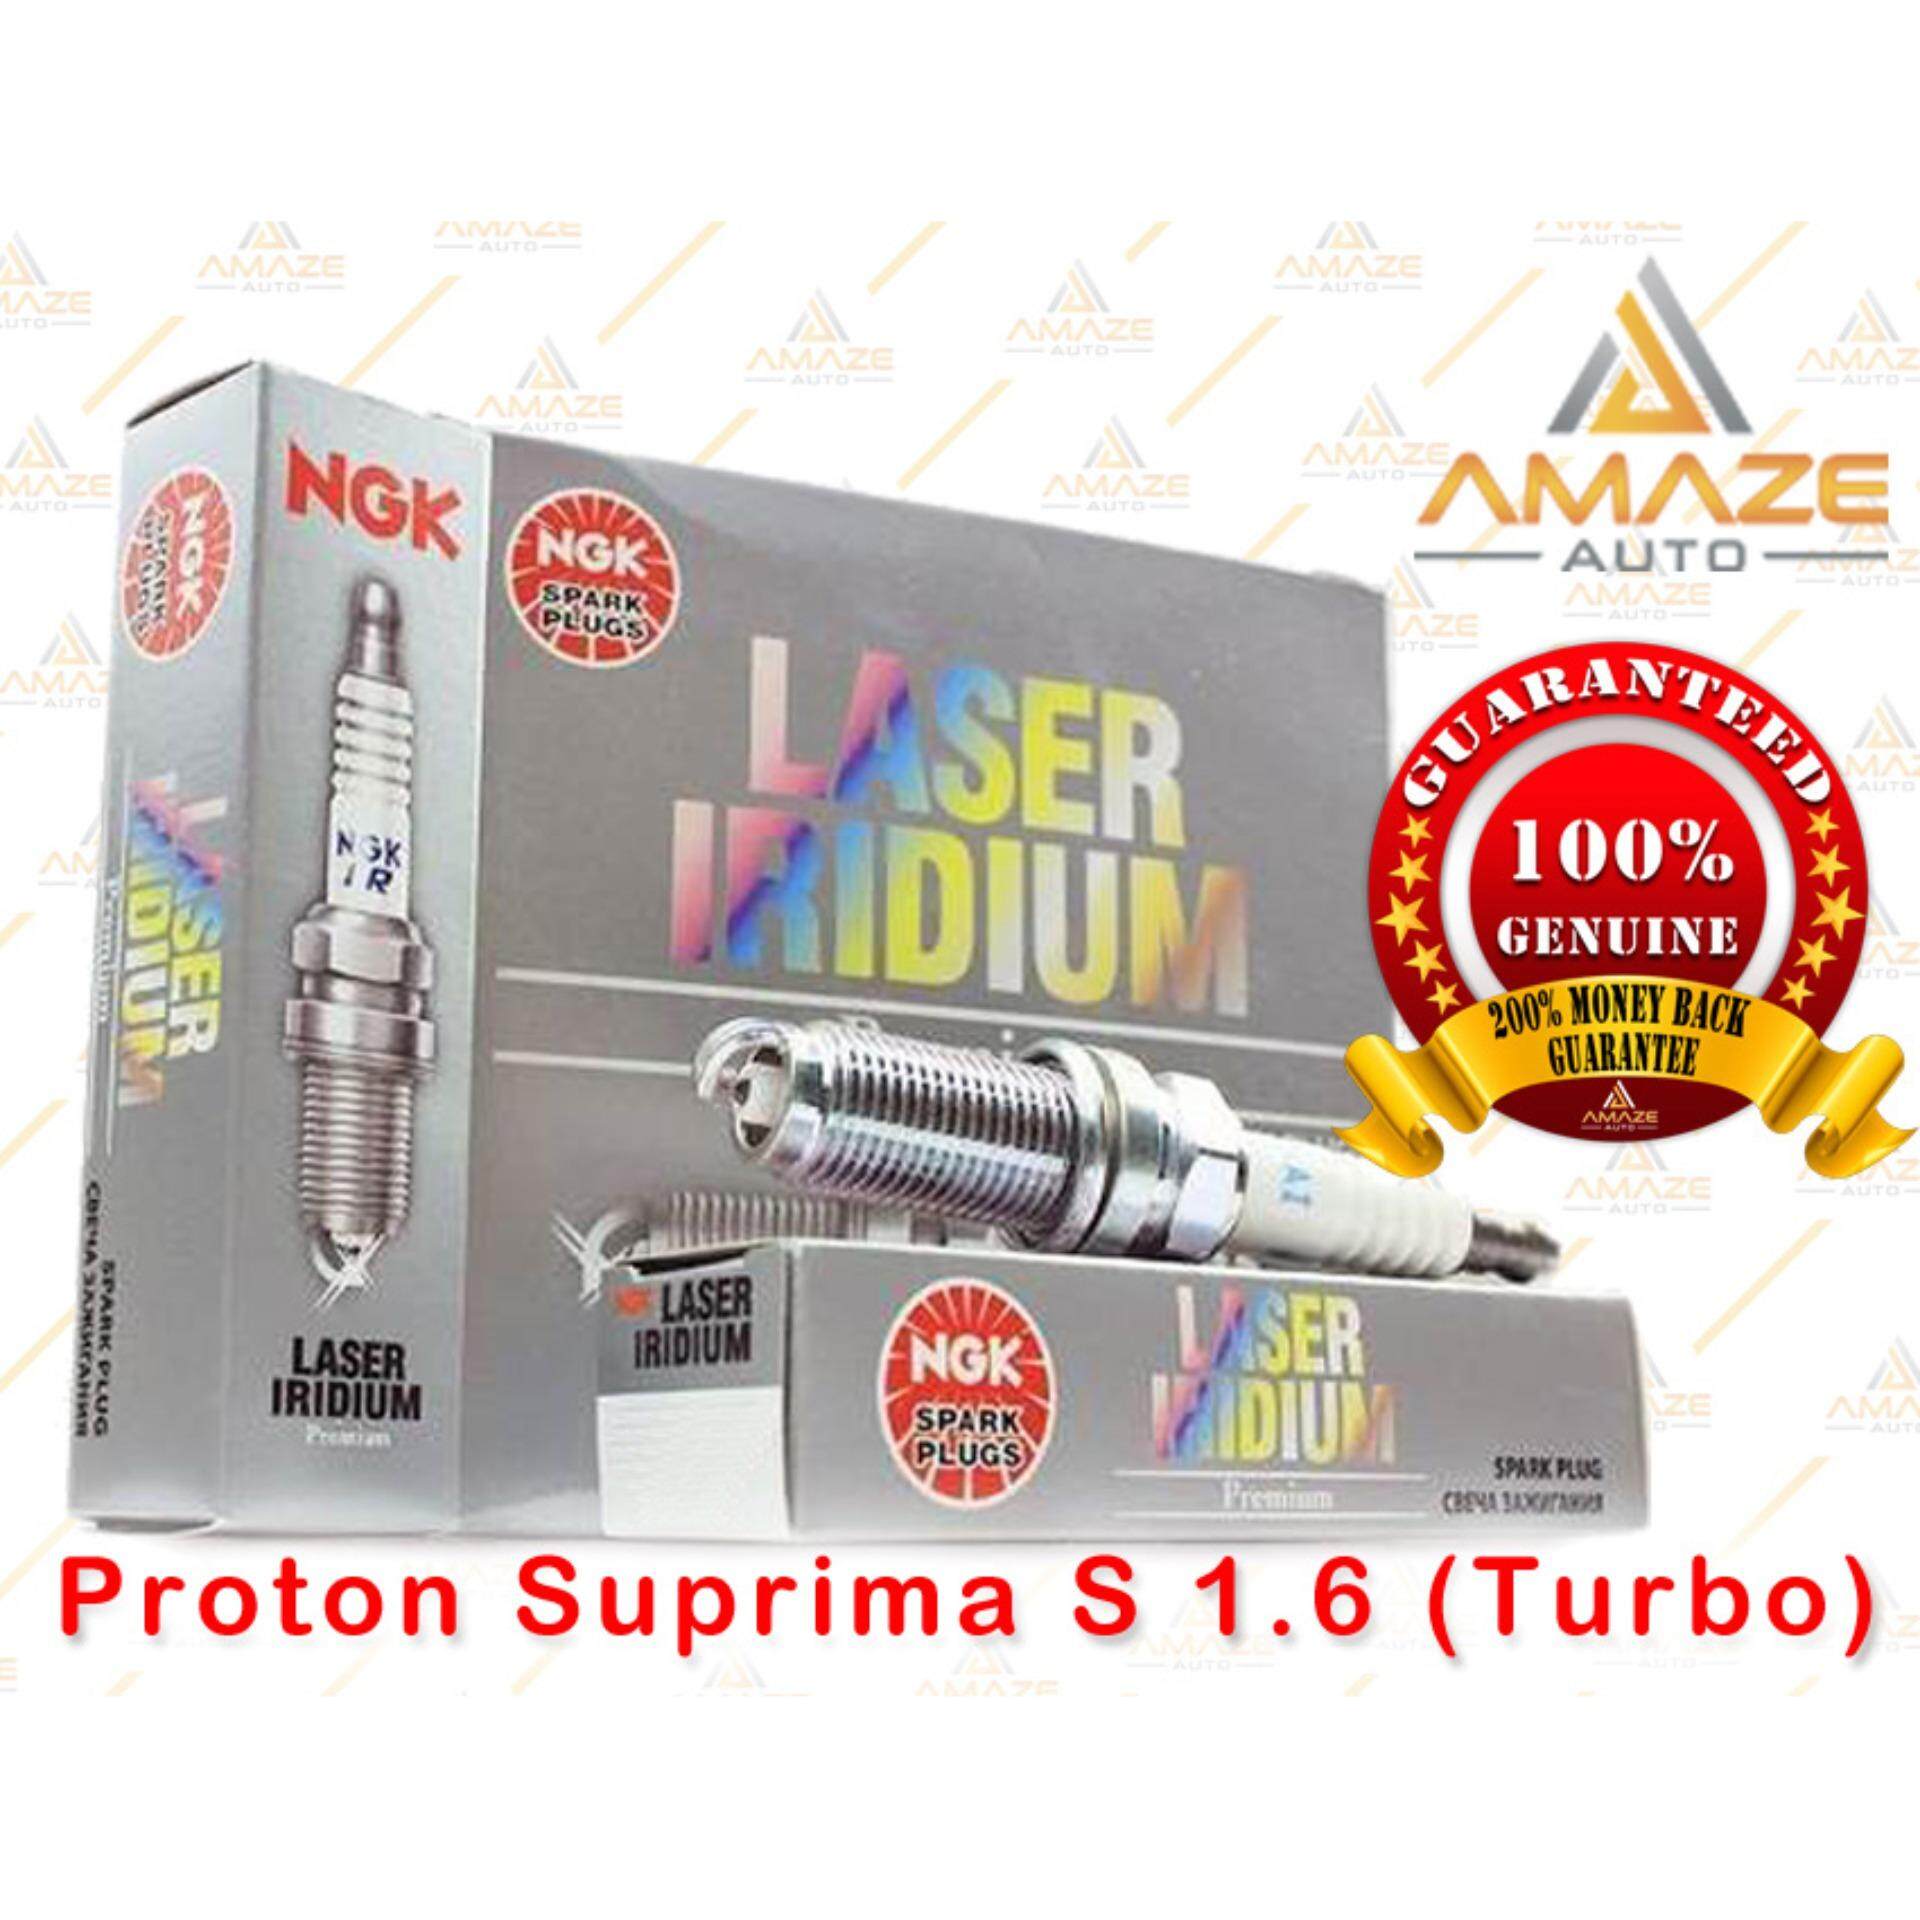 NGK Laser Iridium Spark Plug for Proton Suprima S 1.6 (Turbo)